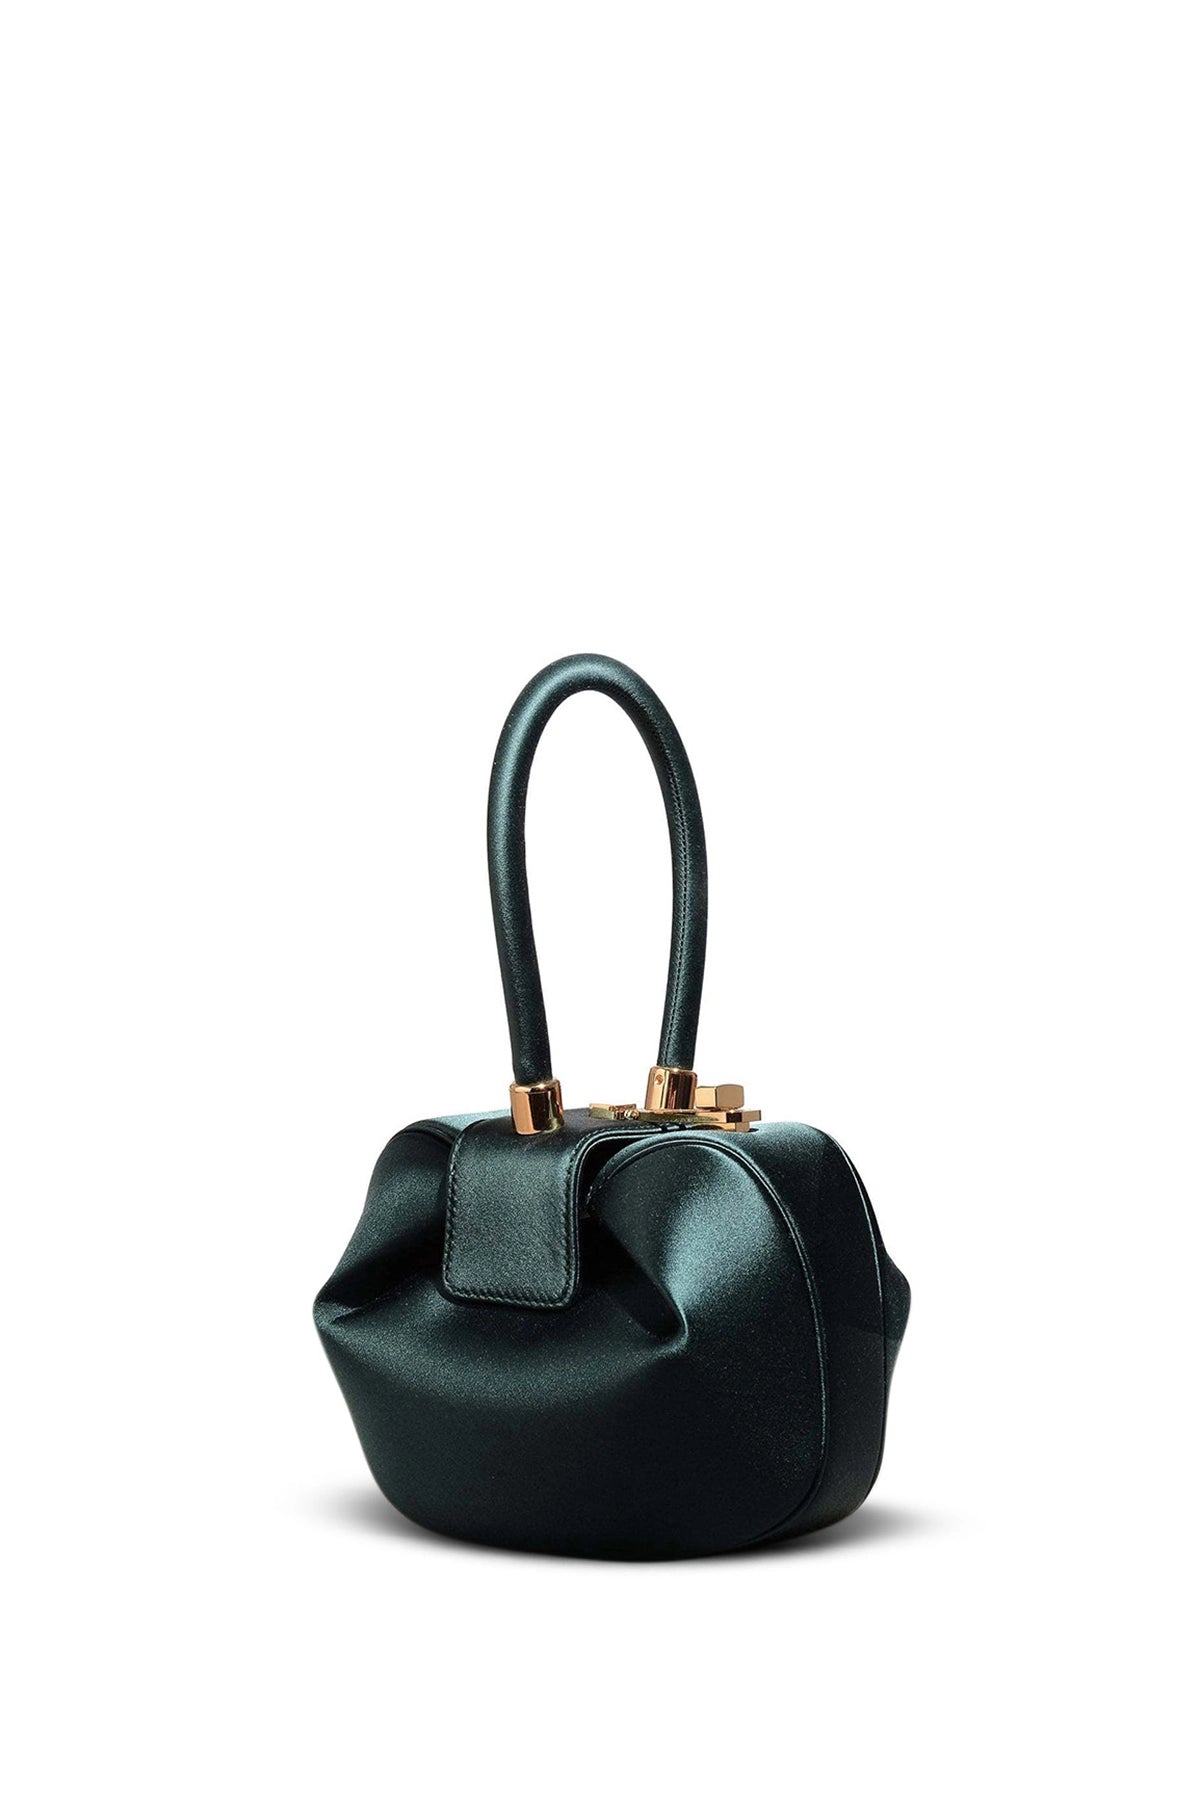 Gabriela Hearst Nina Leather Top-Handle Bag, Black, Women's